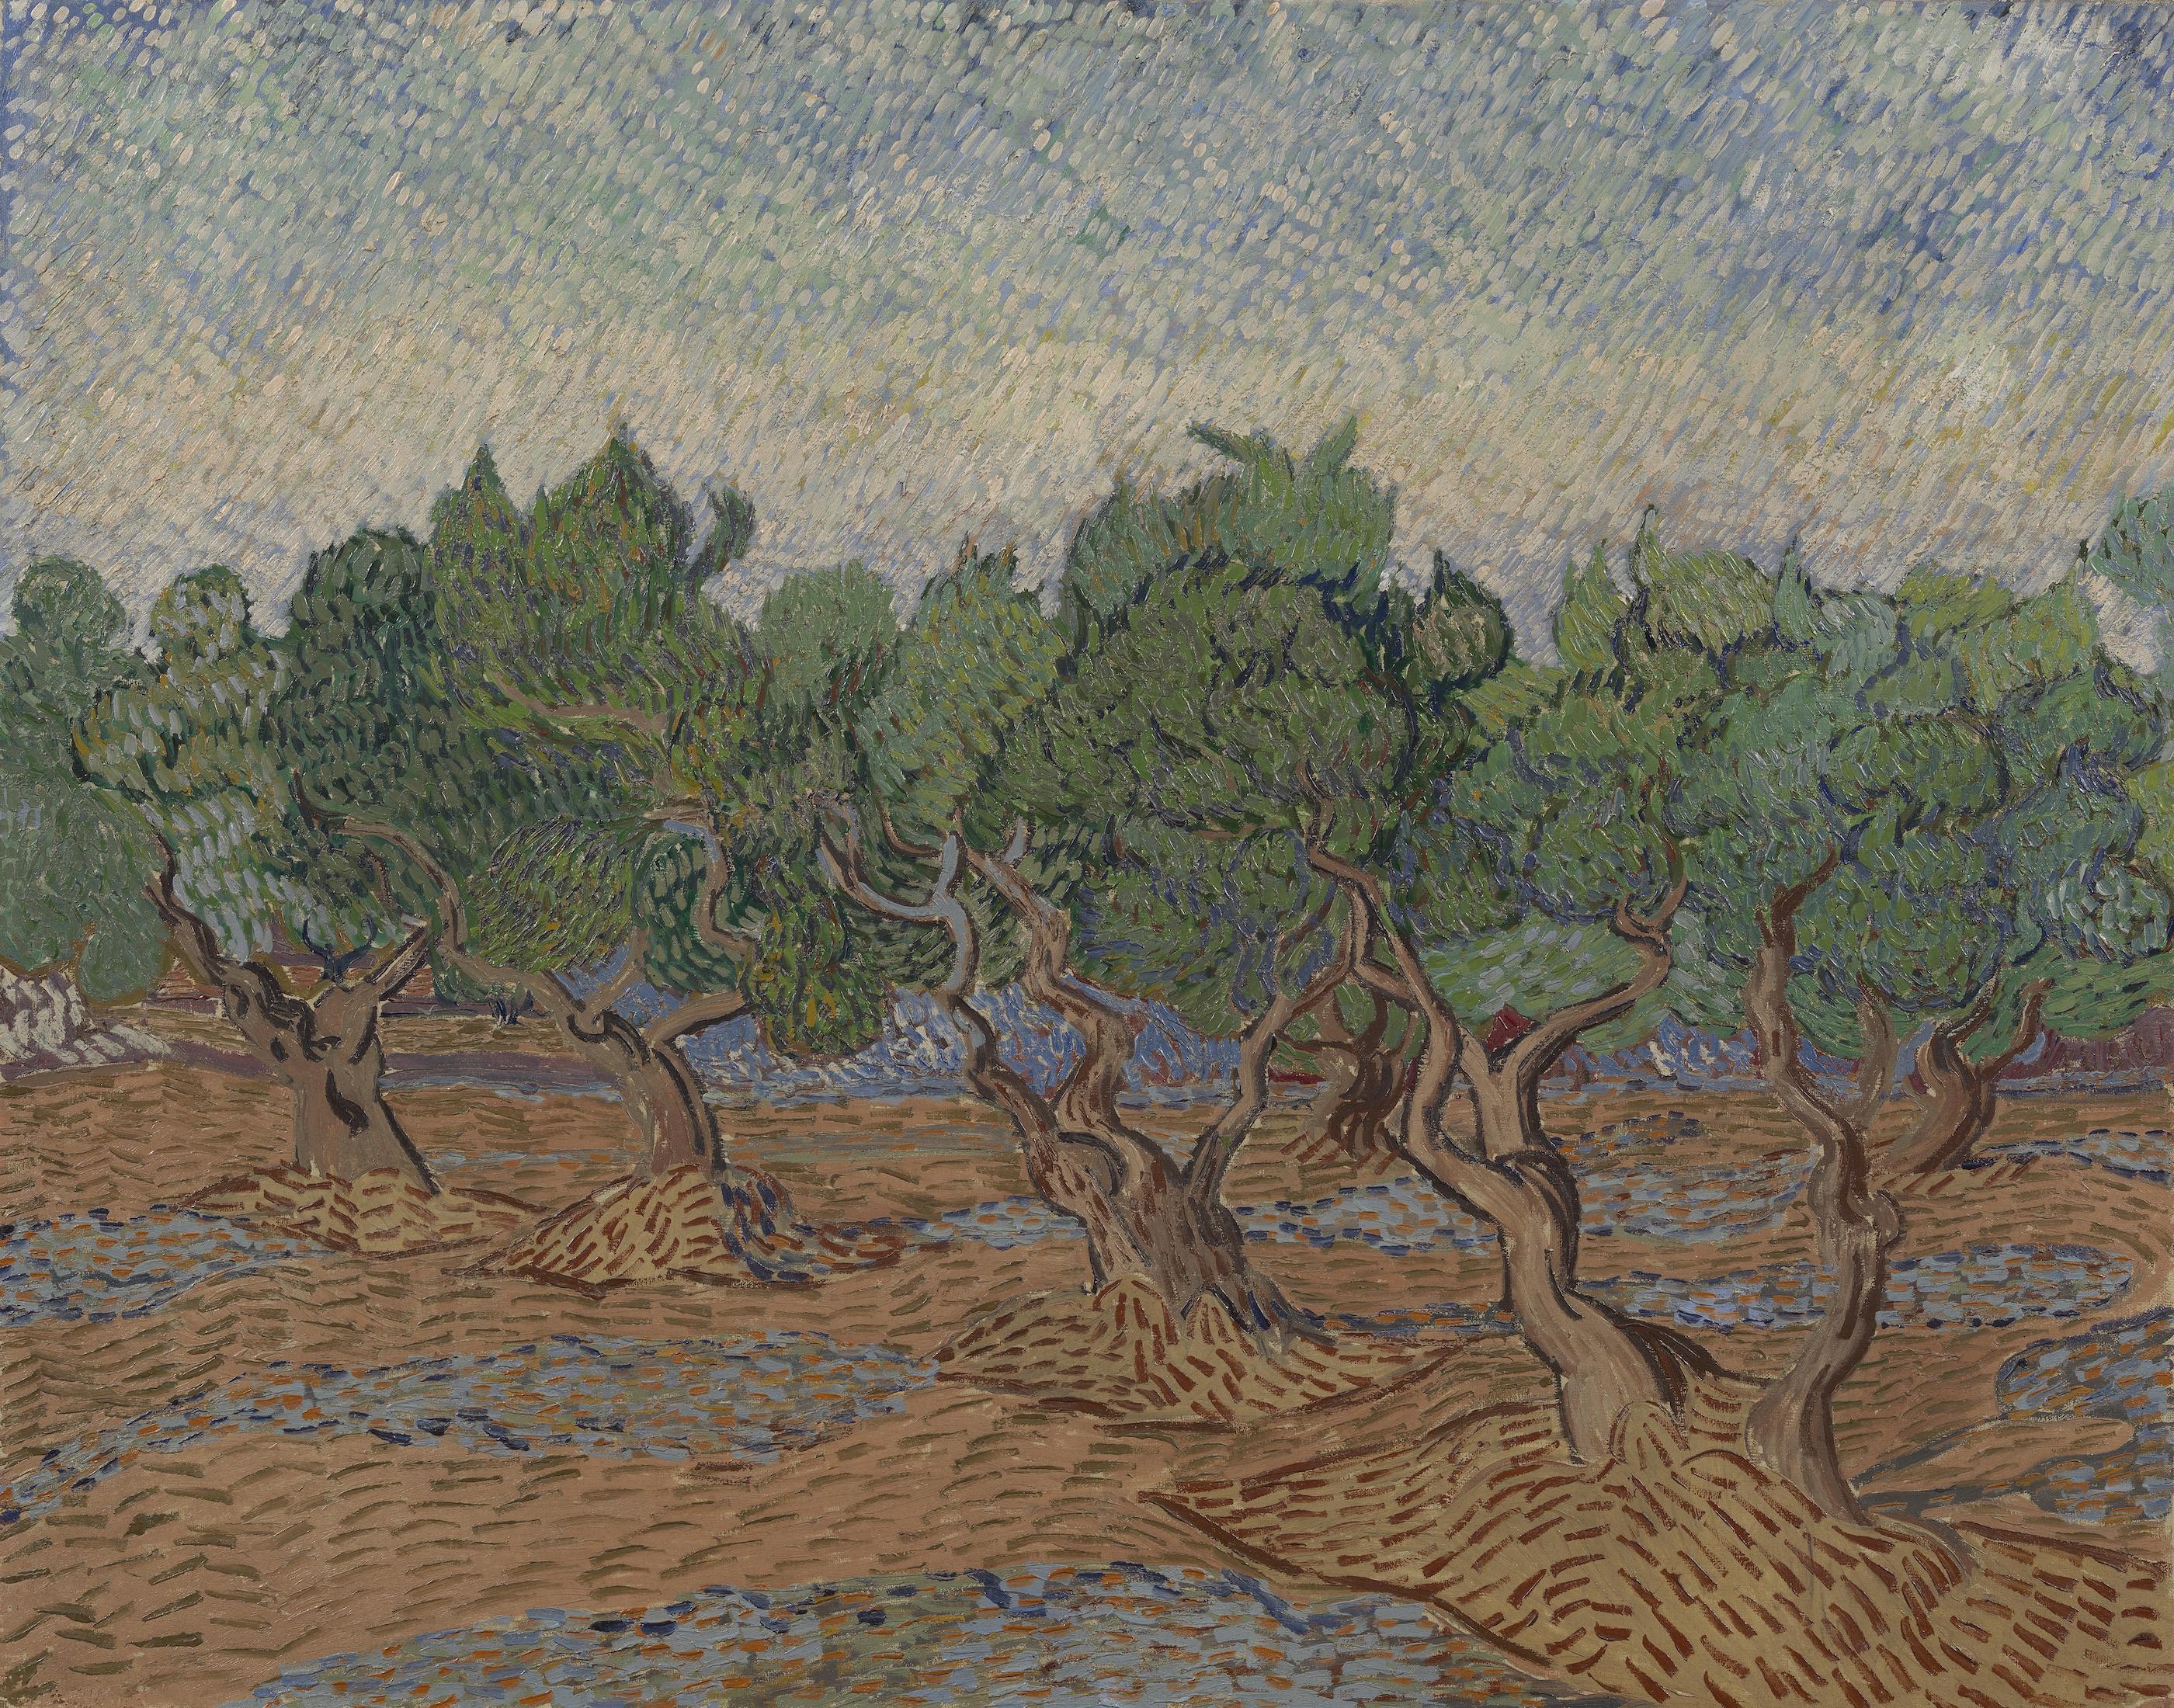 Olivový háj by Vincent van Gogh - listopad-prosinec 1889 - 73,2 x 92,2 cm 